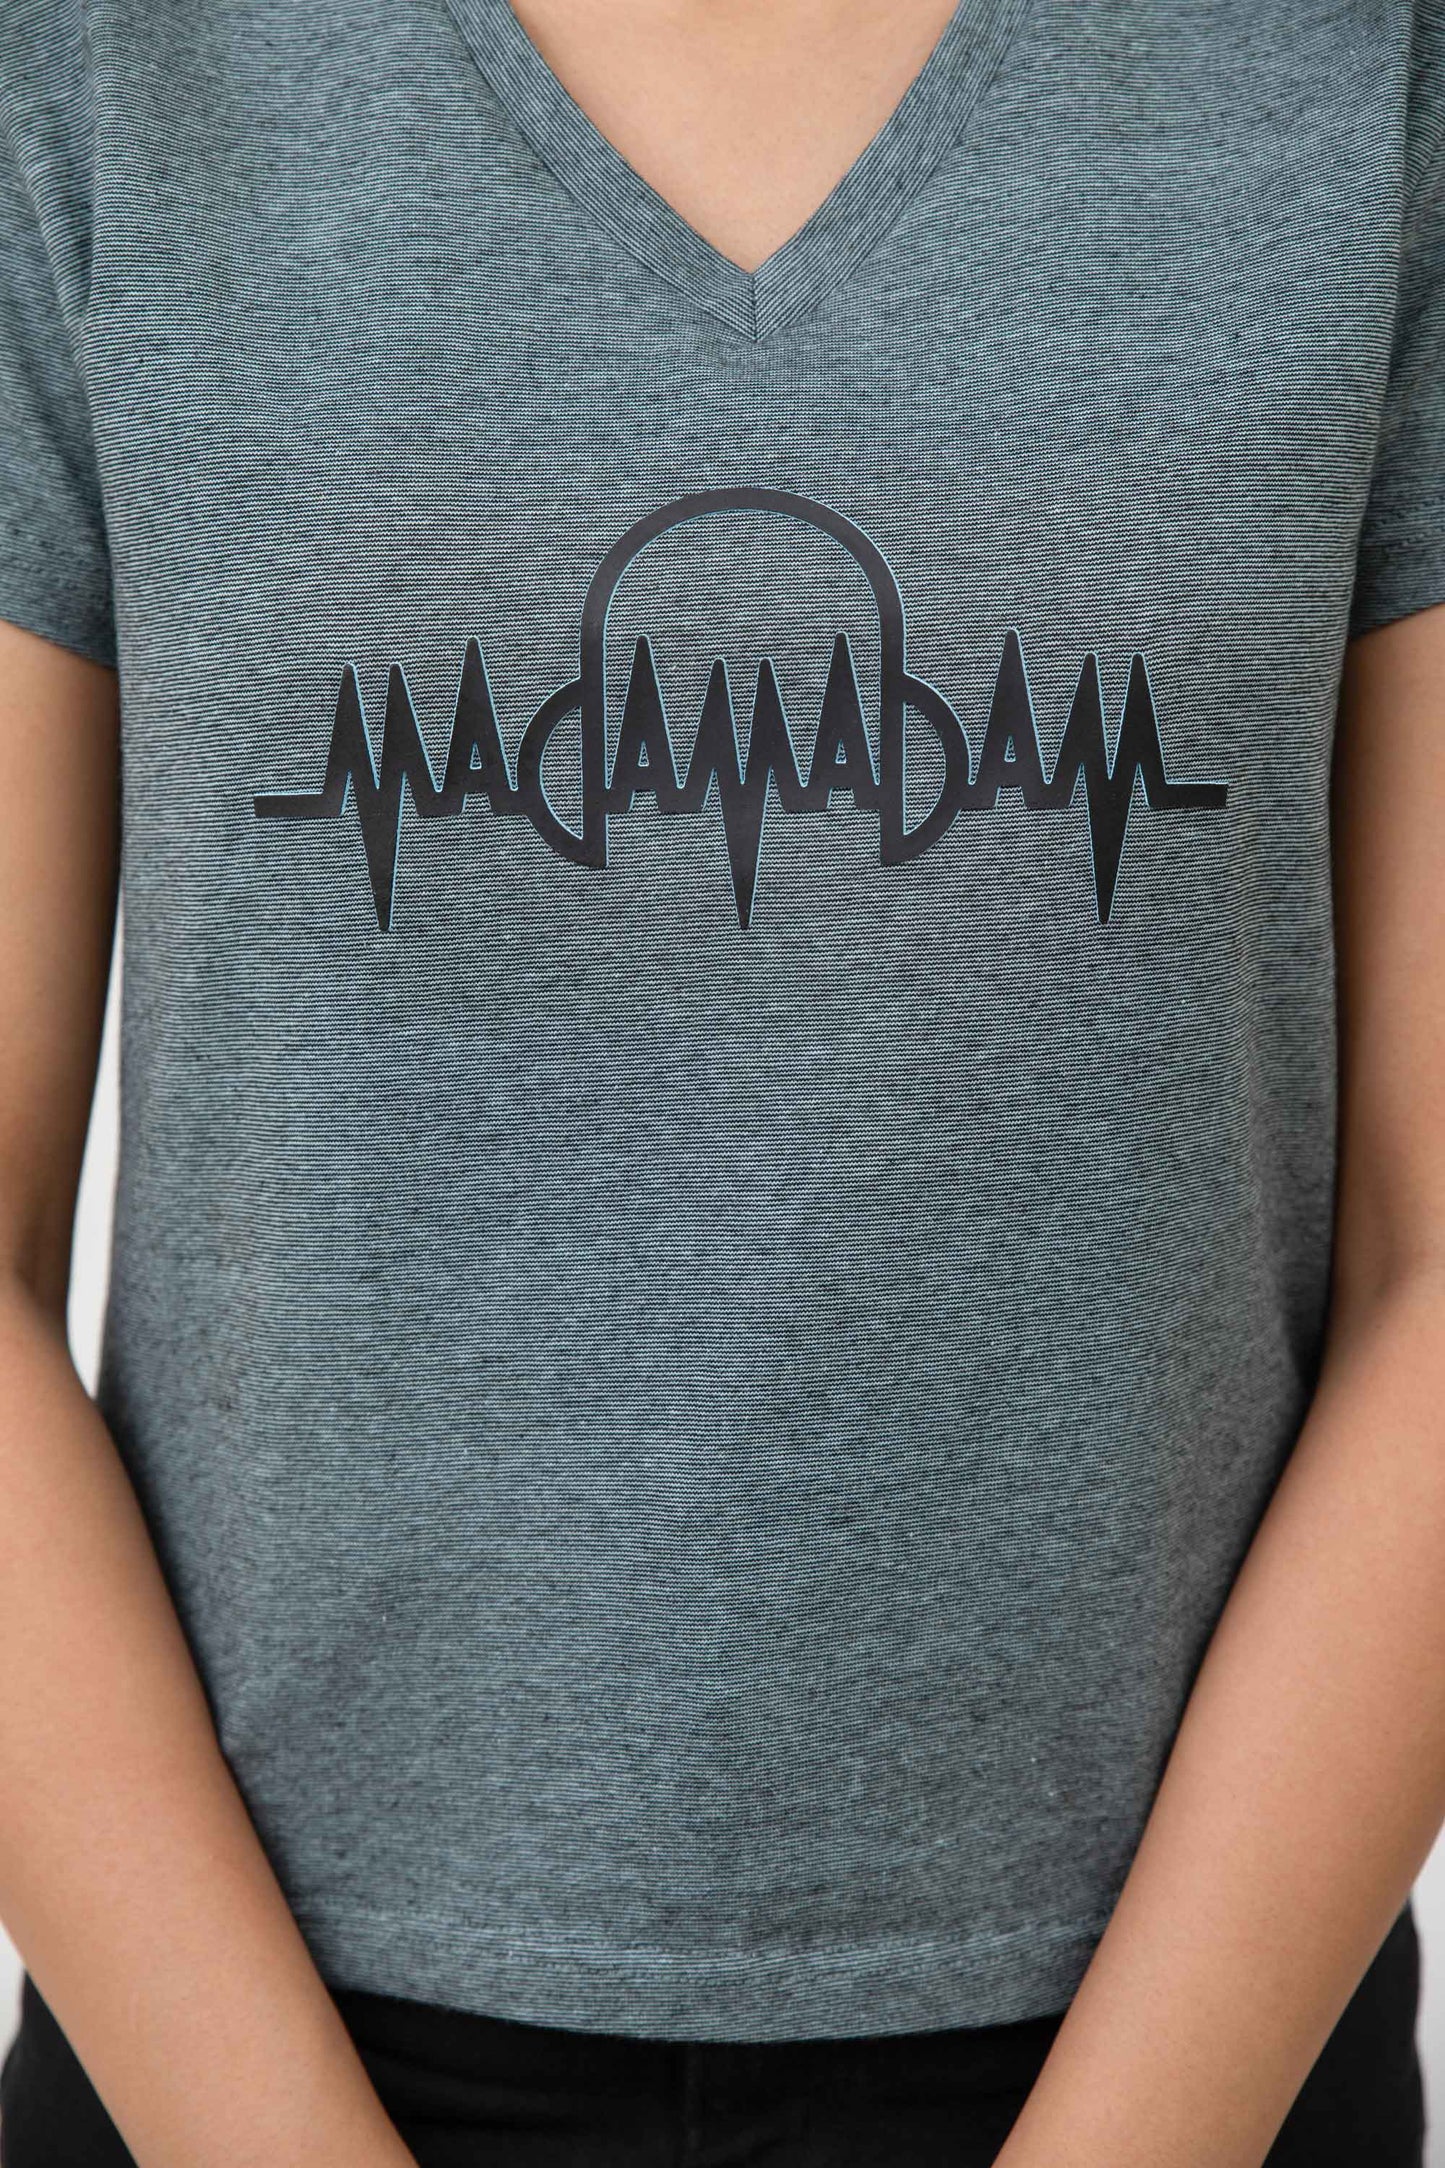 Madamadam Embellish Logo Women's V Neck Tee Shirt Women's Tee Shirt MADAMADAM 